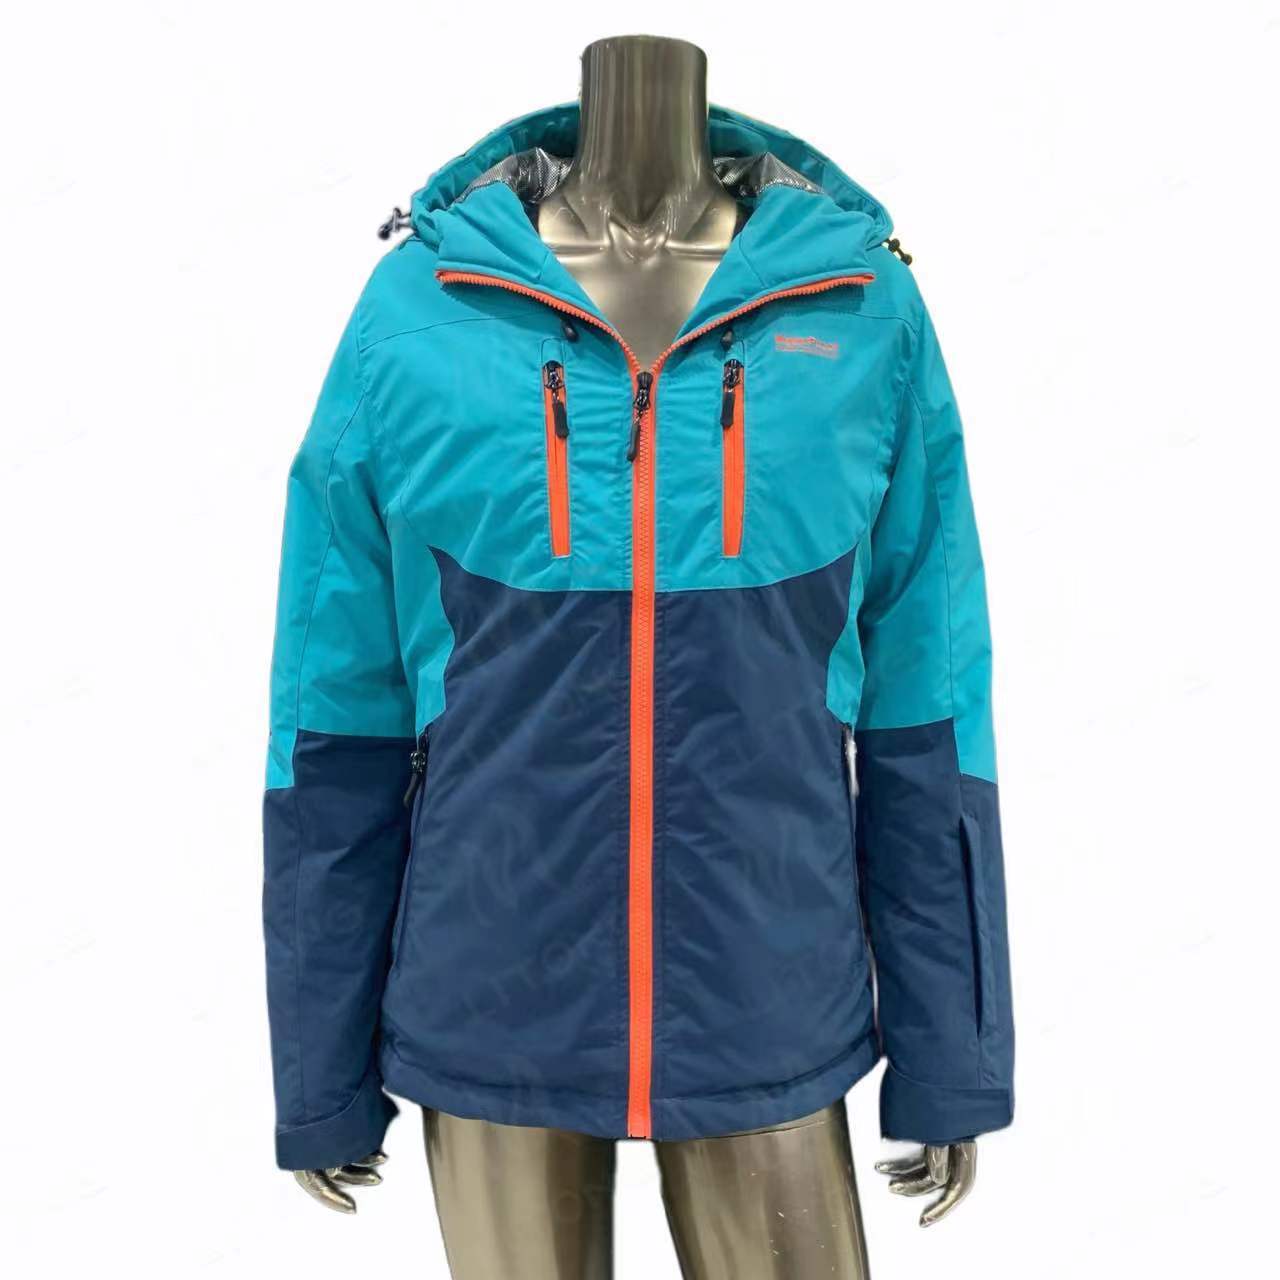 Woman winter ski jacket outdoor jacket